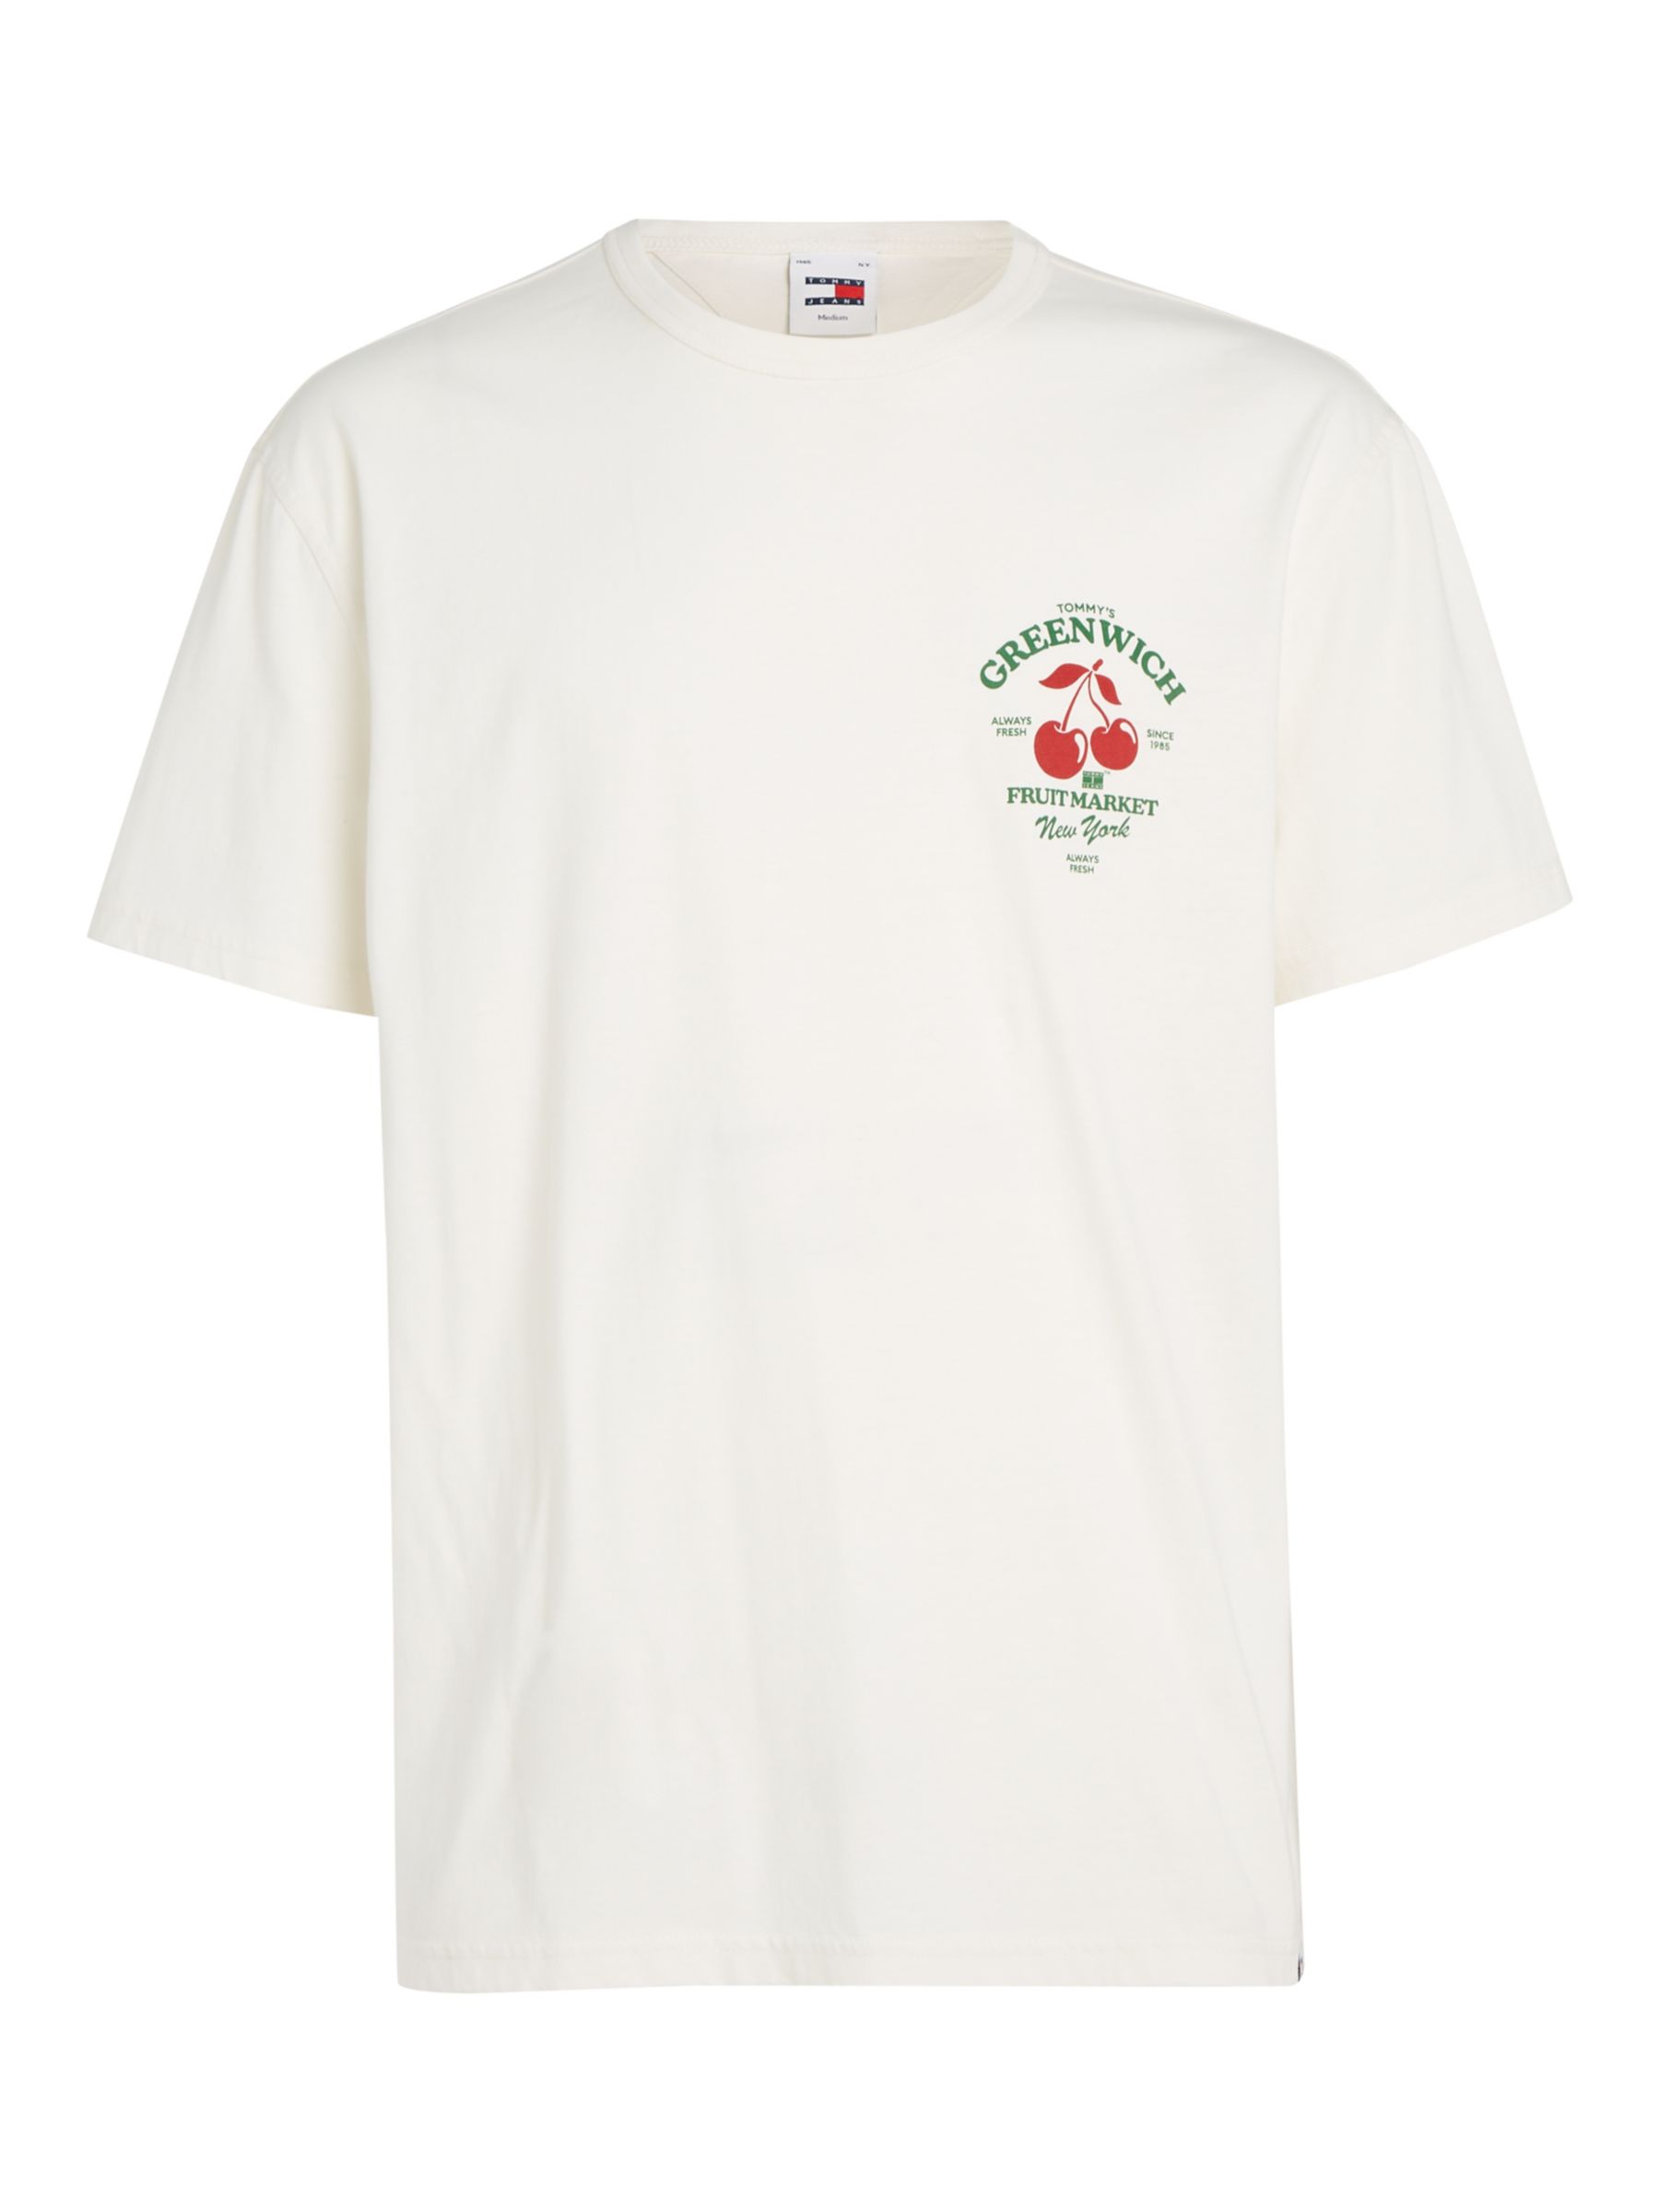 Tommy Hilfiger Novelty Short Sleeve T-Shirt, Ancient White, L